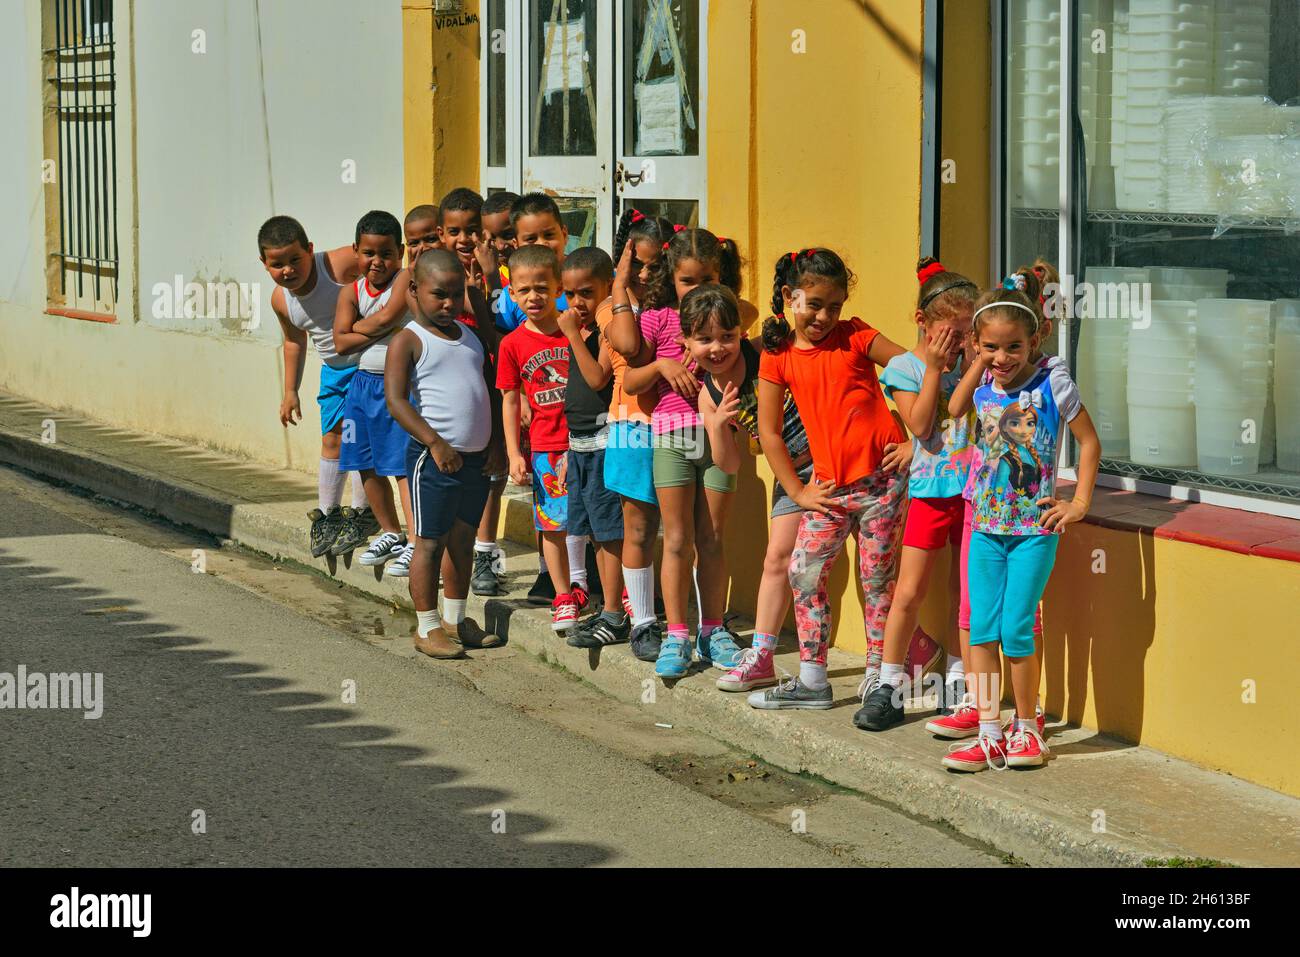 Street scene in Old Havana- First grade schoolchildren, La Habana (Havana), Habana, Cuba Stock Photo